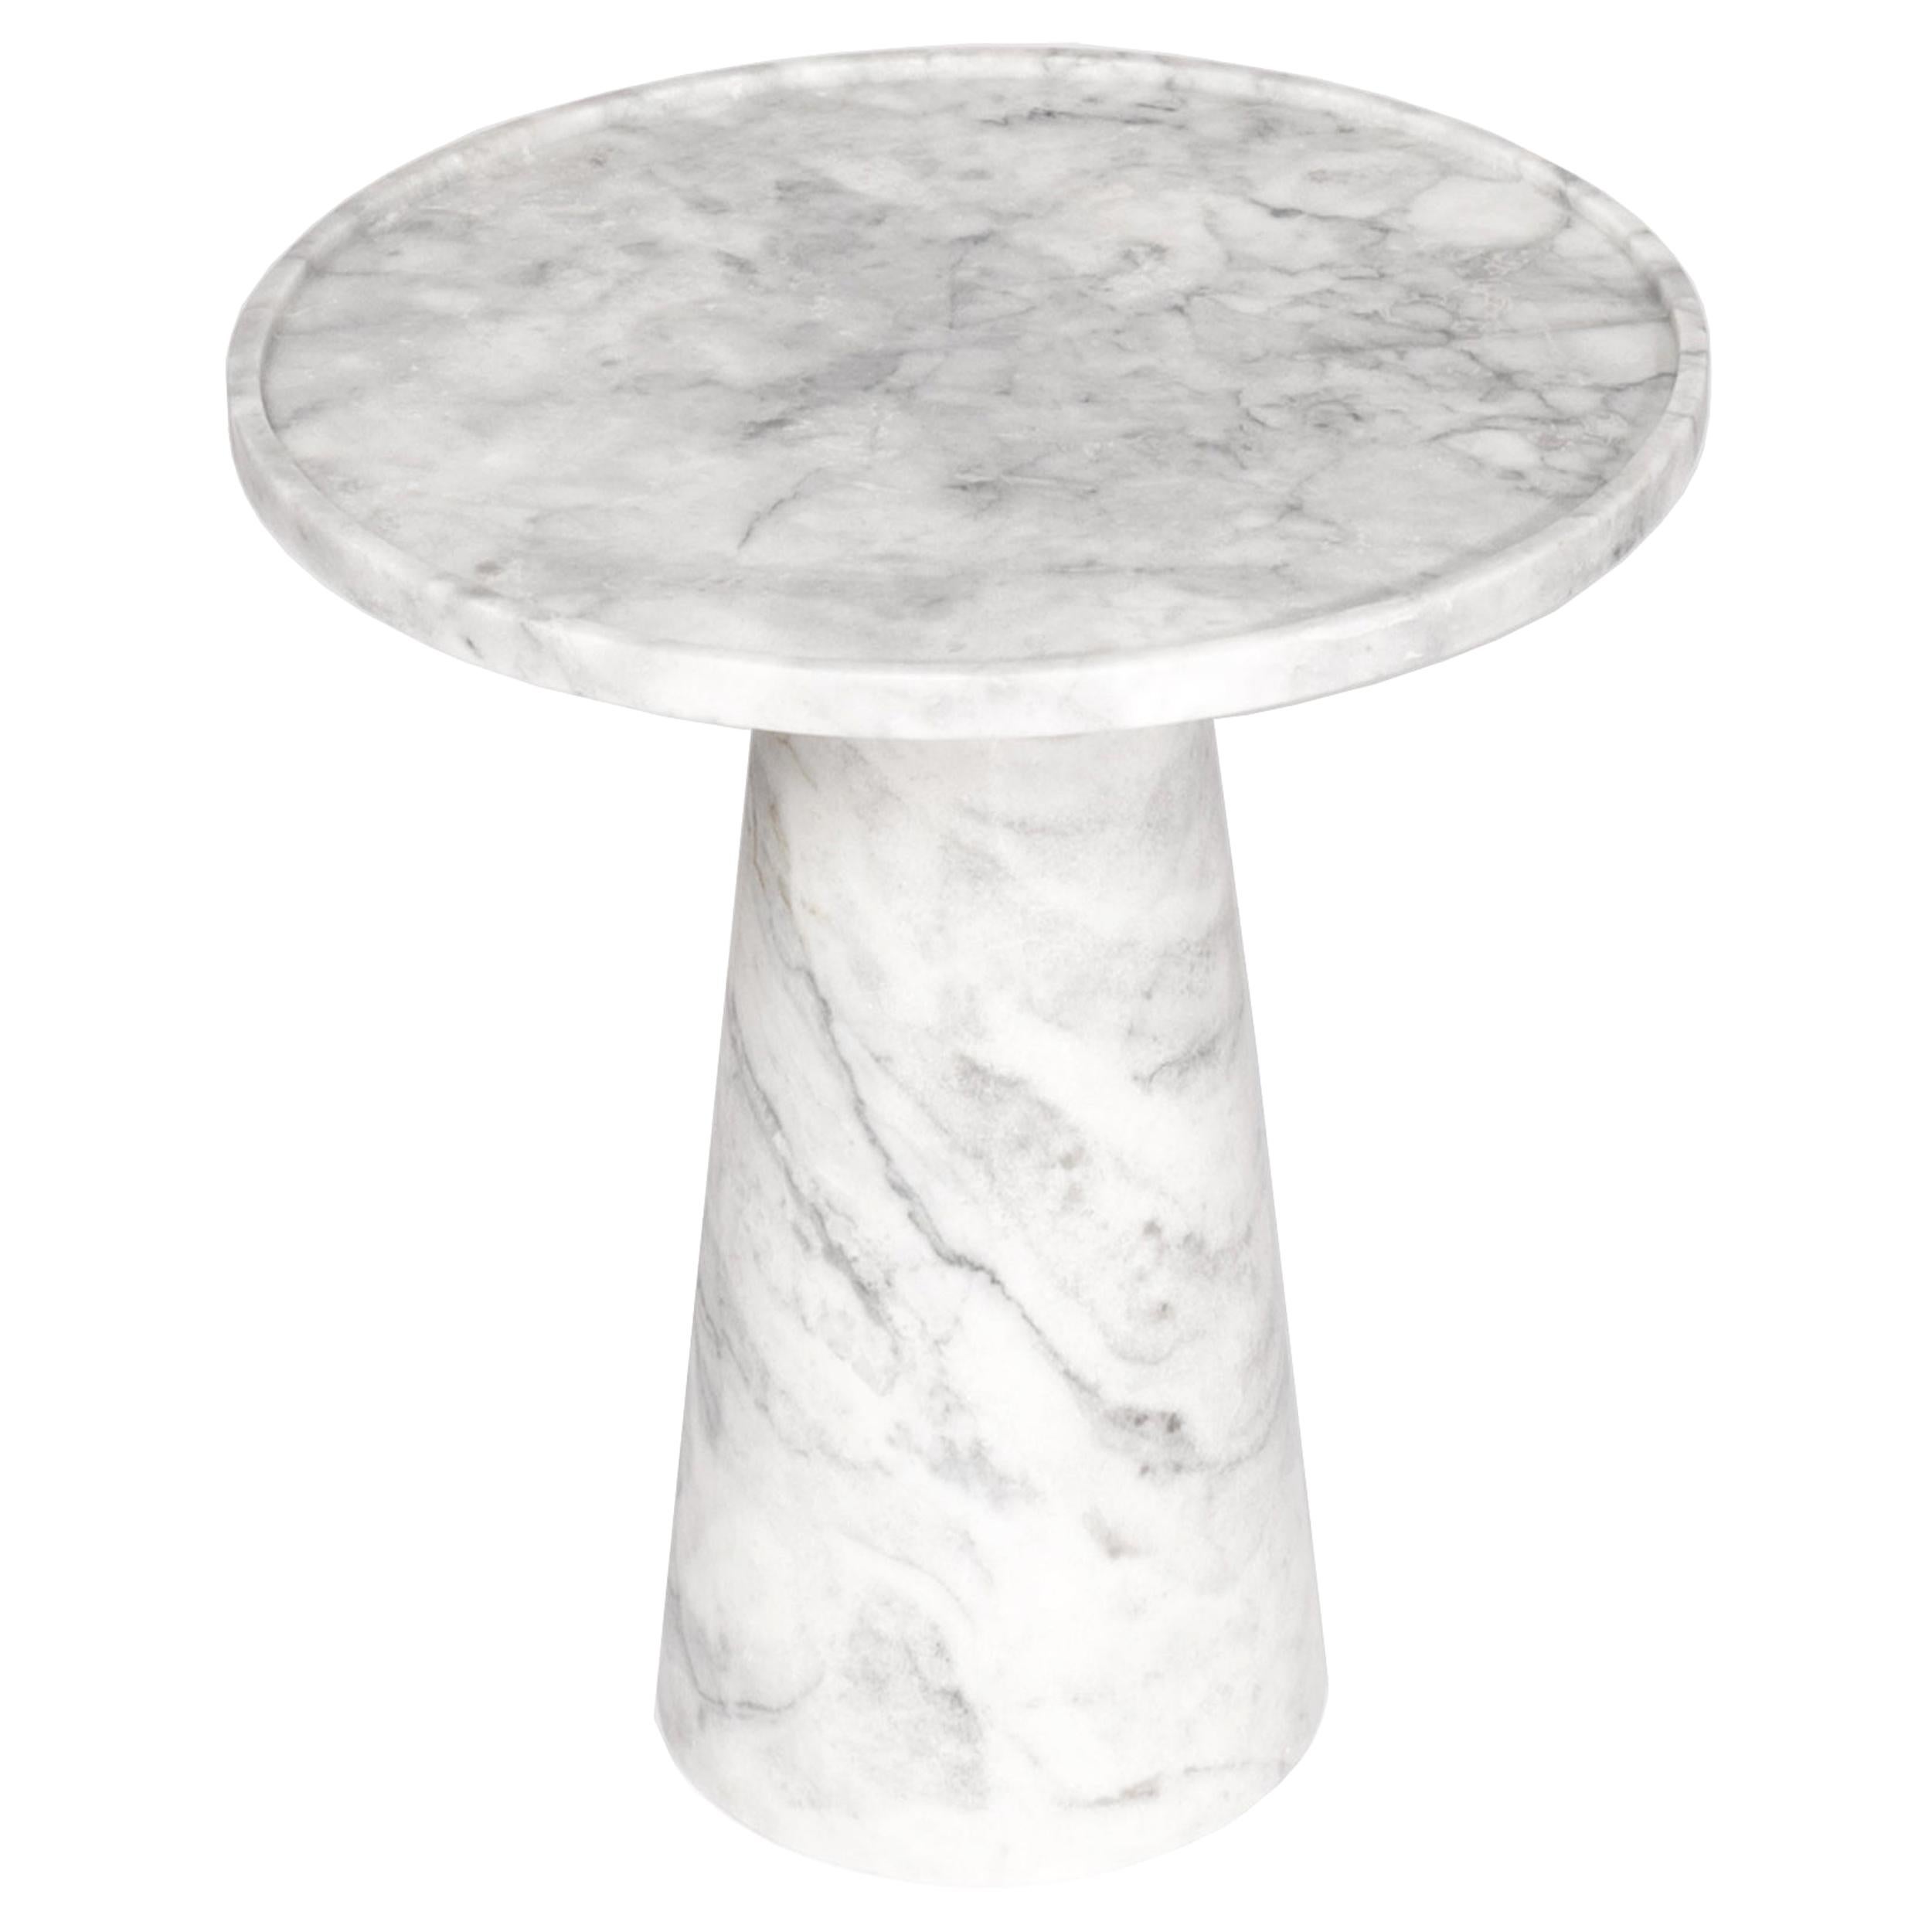 Pedestal White Marble Side Table For, Pedestal Lamp Table